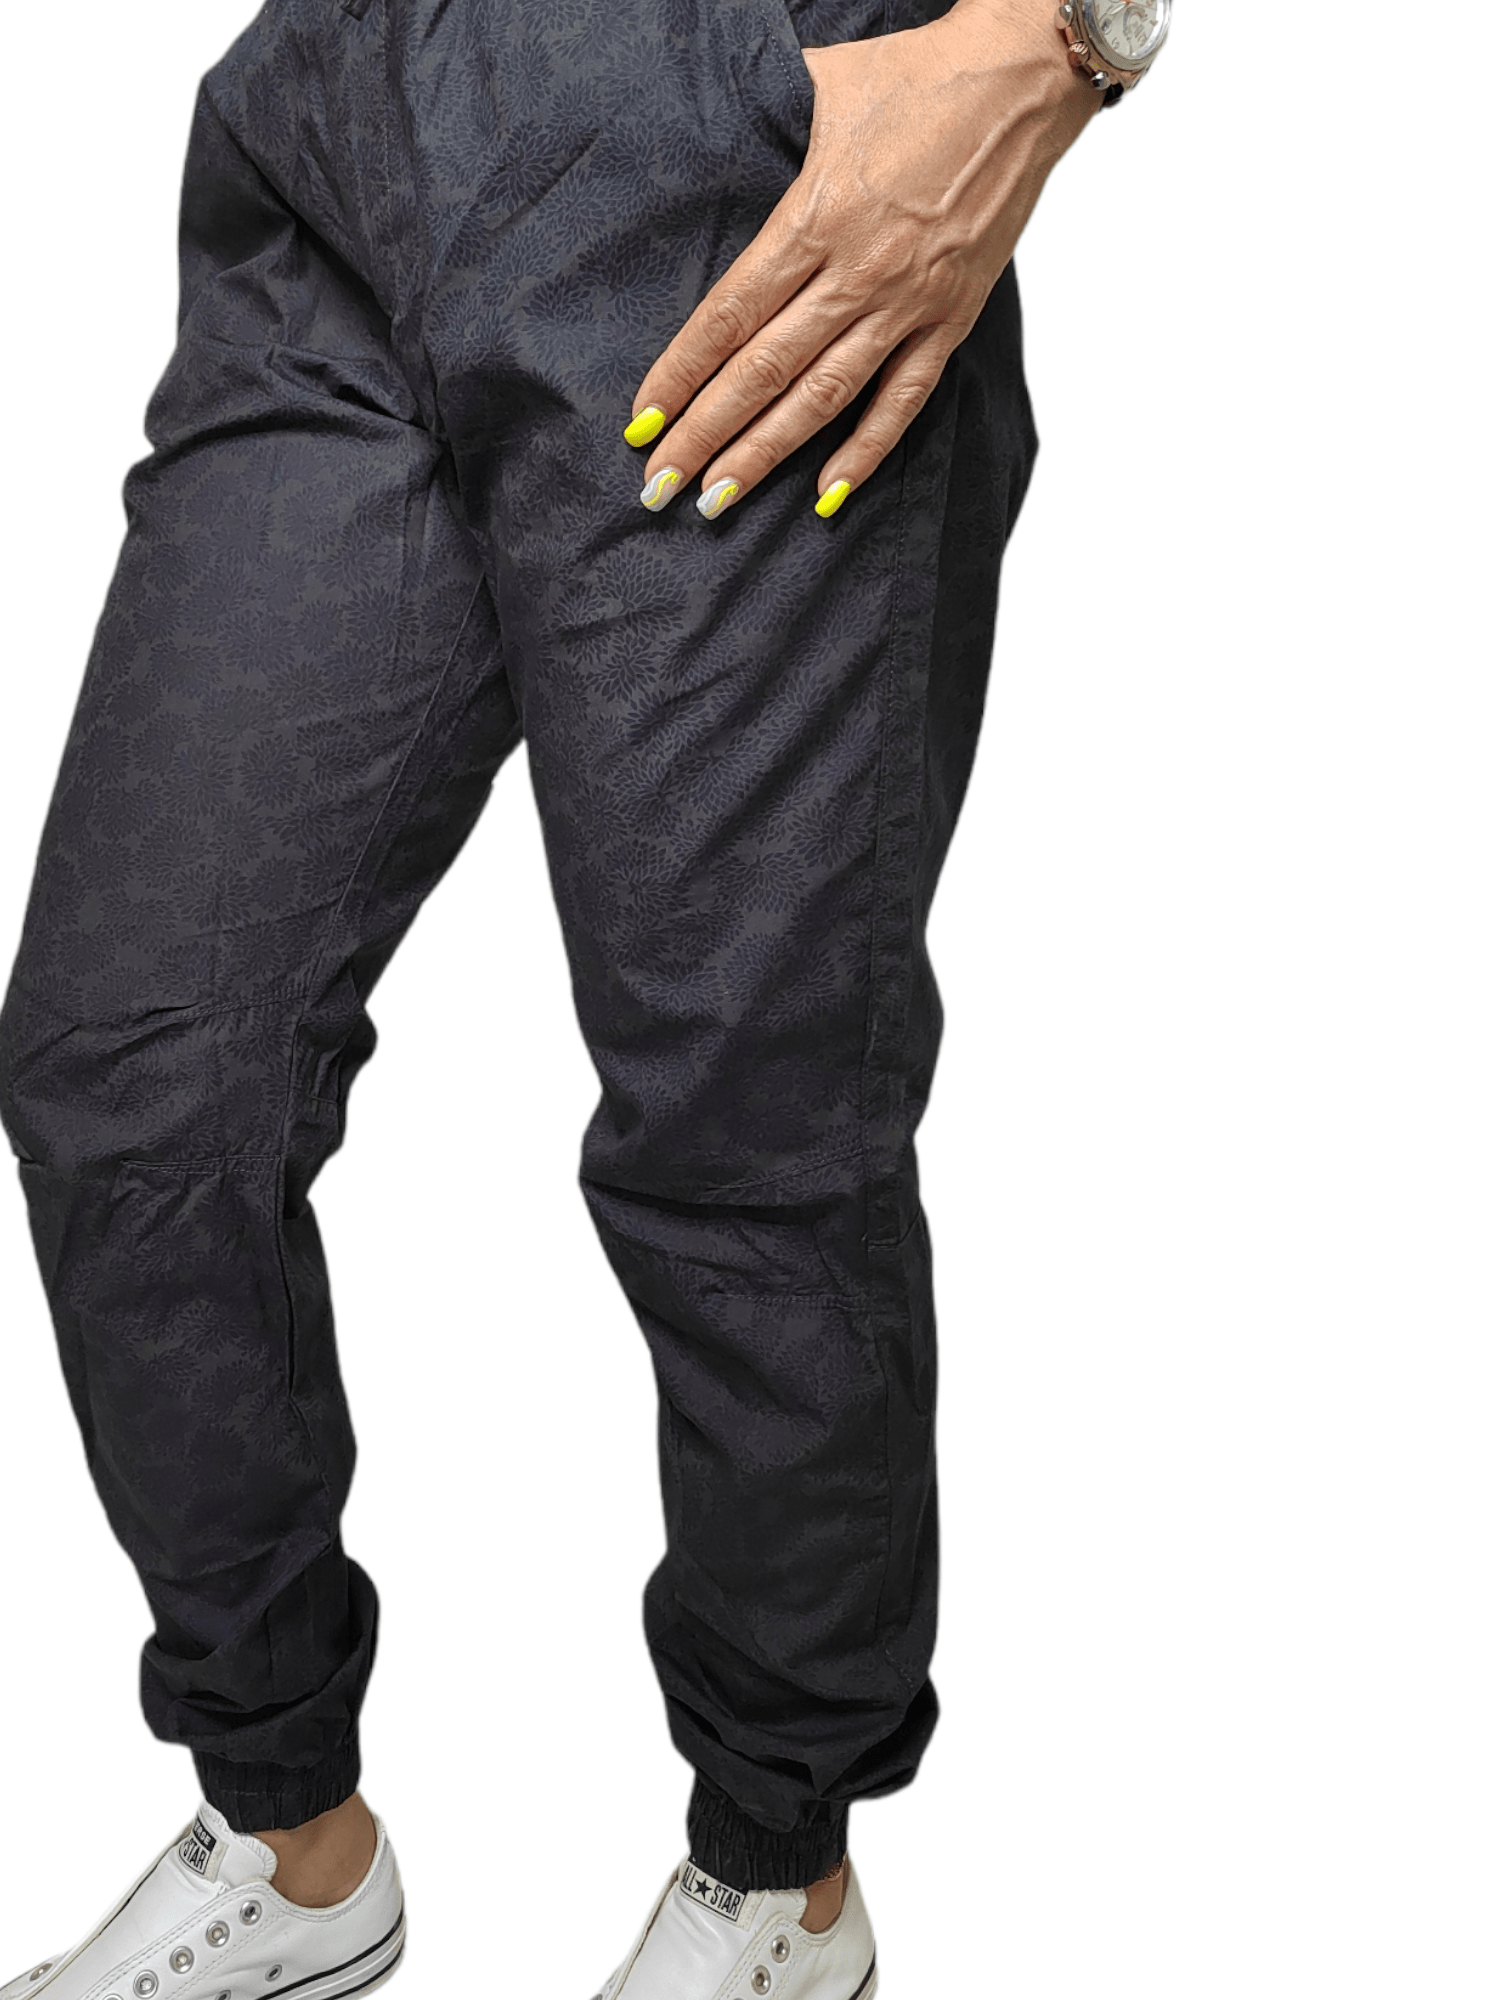 ElOutlet - Summer Women Pants Women Pants [1] - Black + patterns